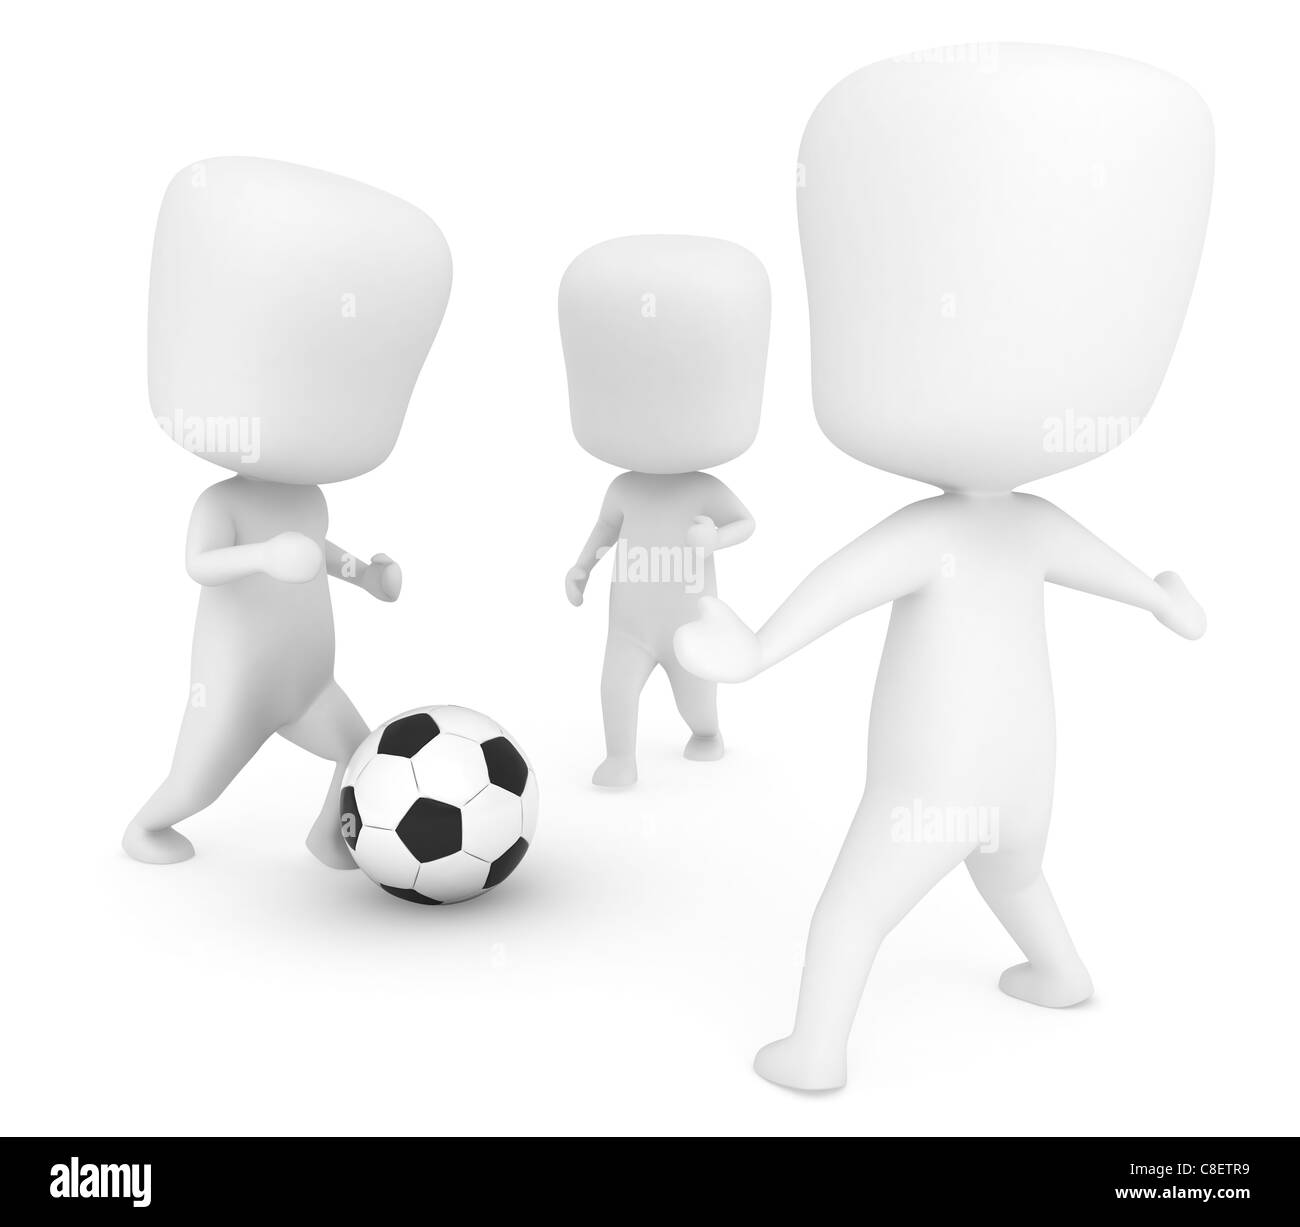 3D Illustration of Men / Kids Playing Soccer Stock Photo